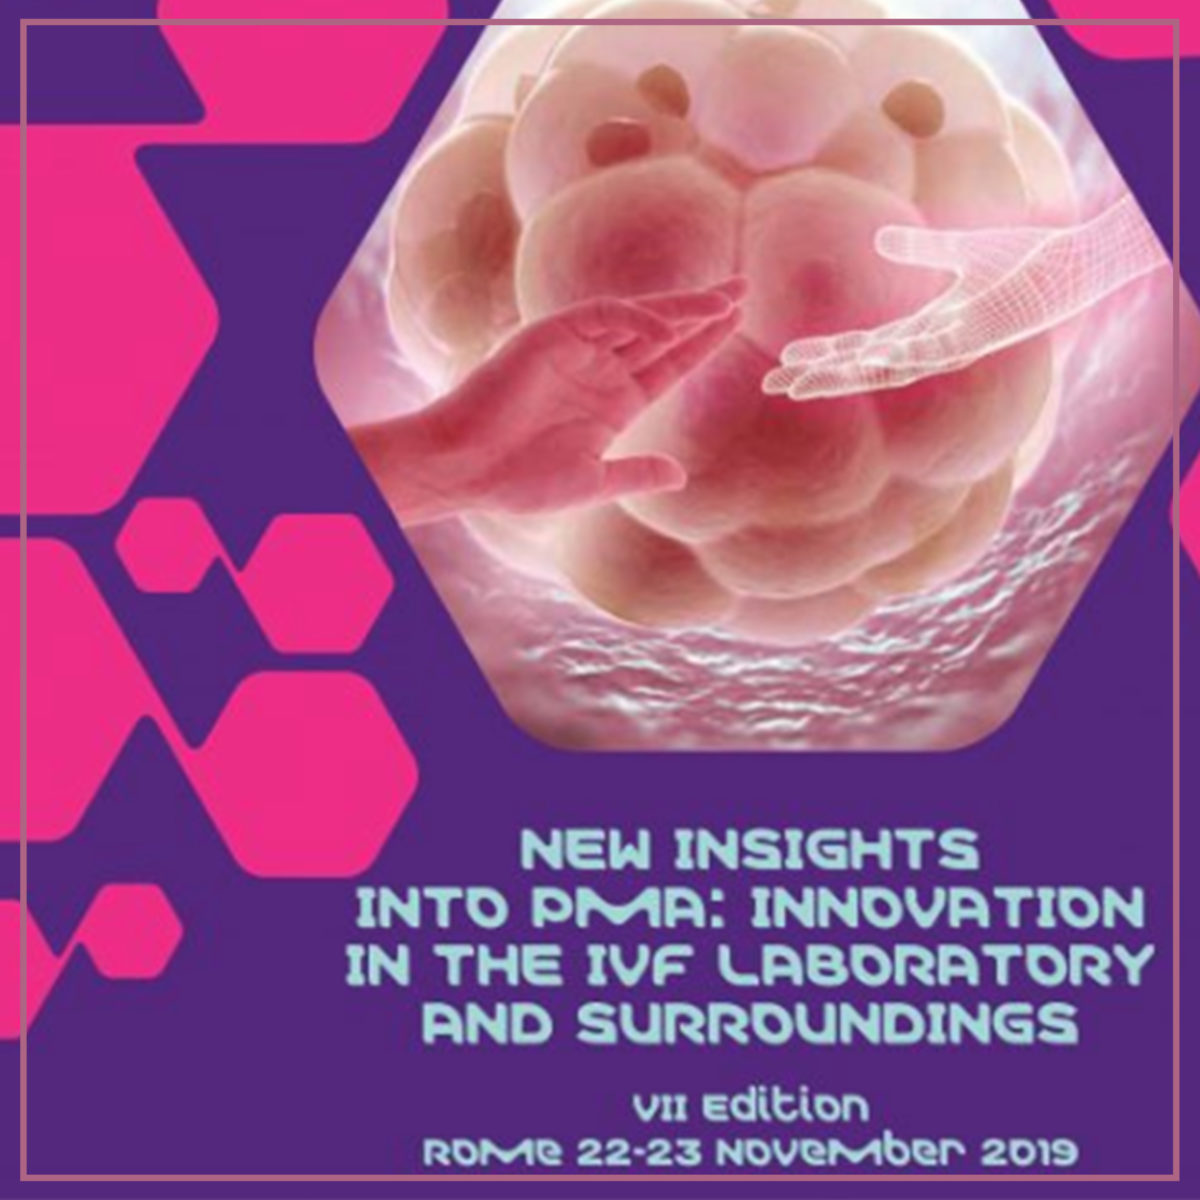 New-insights-into-PMA-innovatio-in-the-IVF-Laboratory-and-surroundings-Dr.ssa-Gemma-Fabozzi-B-Woman-1200x1200.jpg